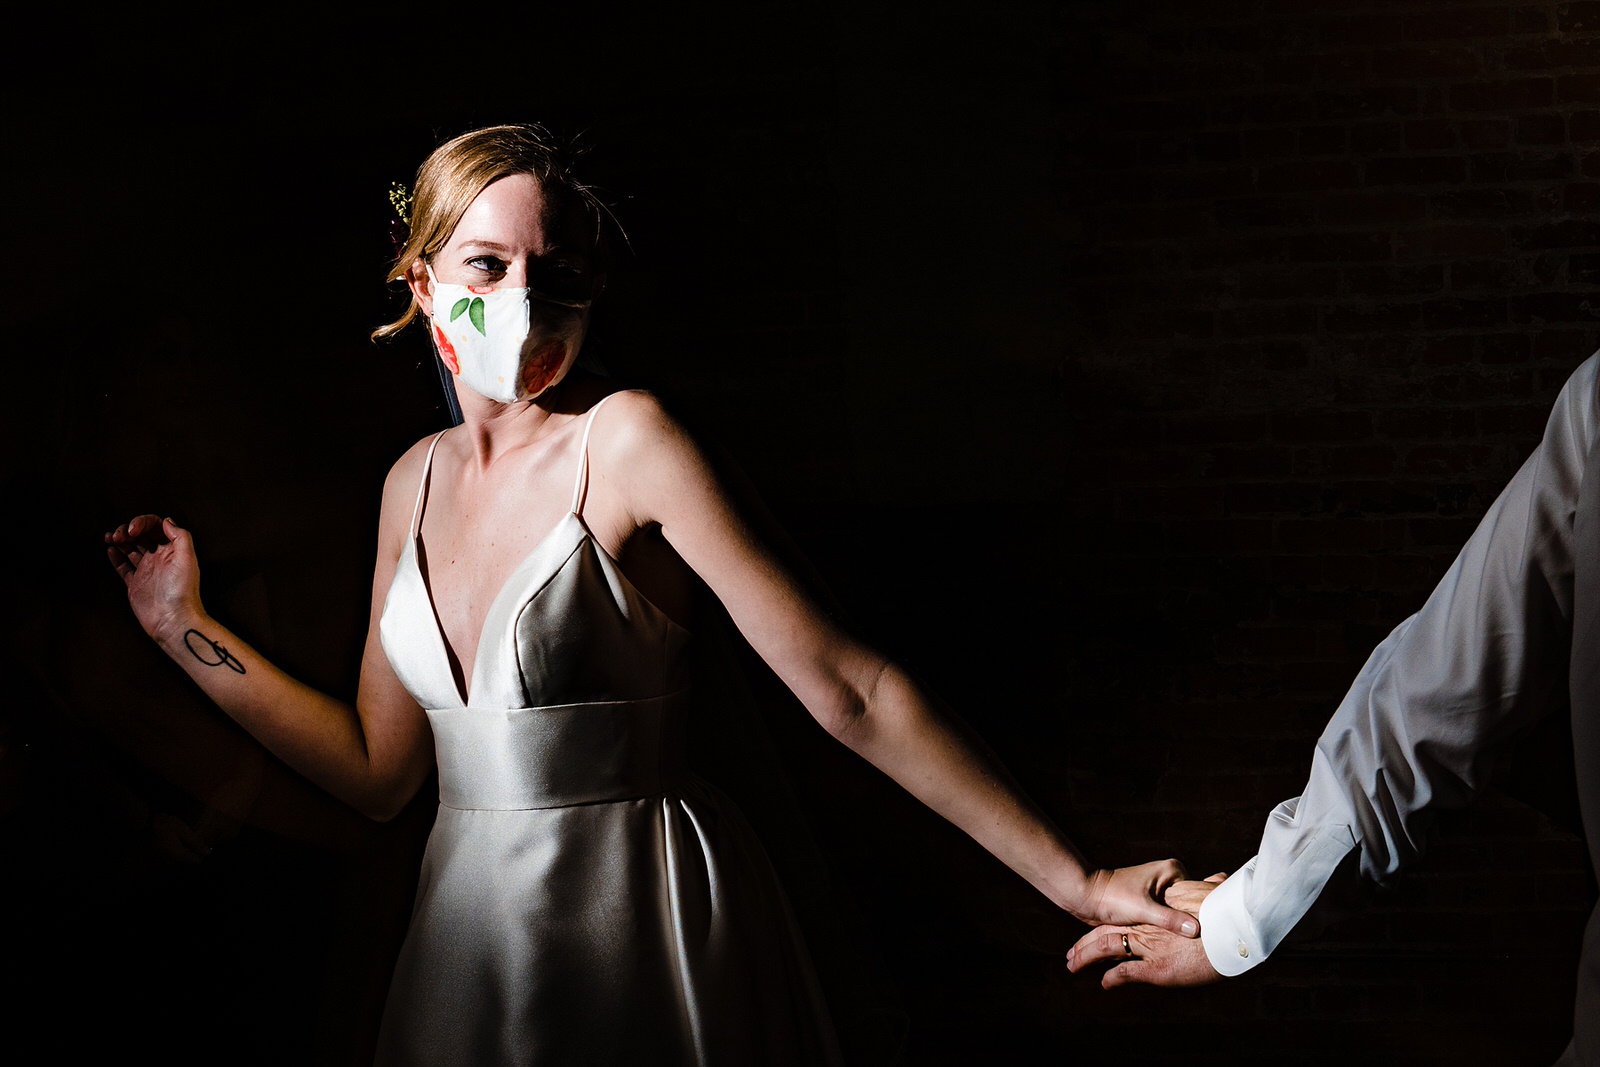 Bride dances in a custom mask on her wedding day